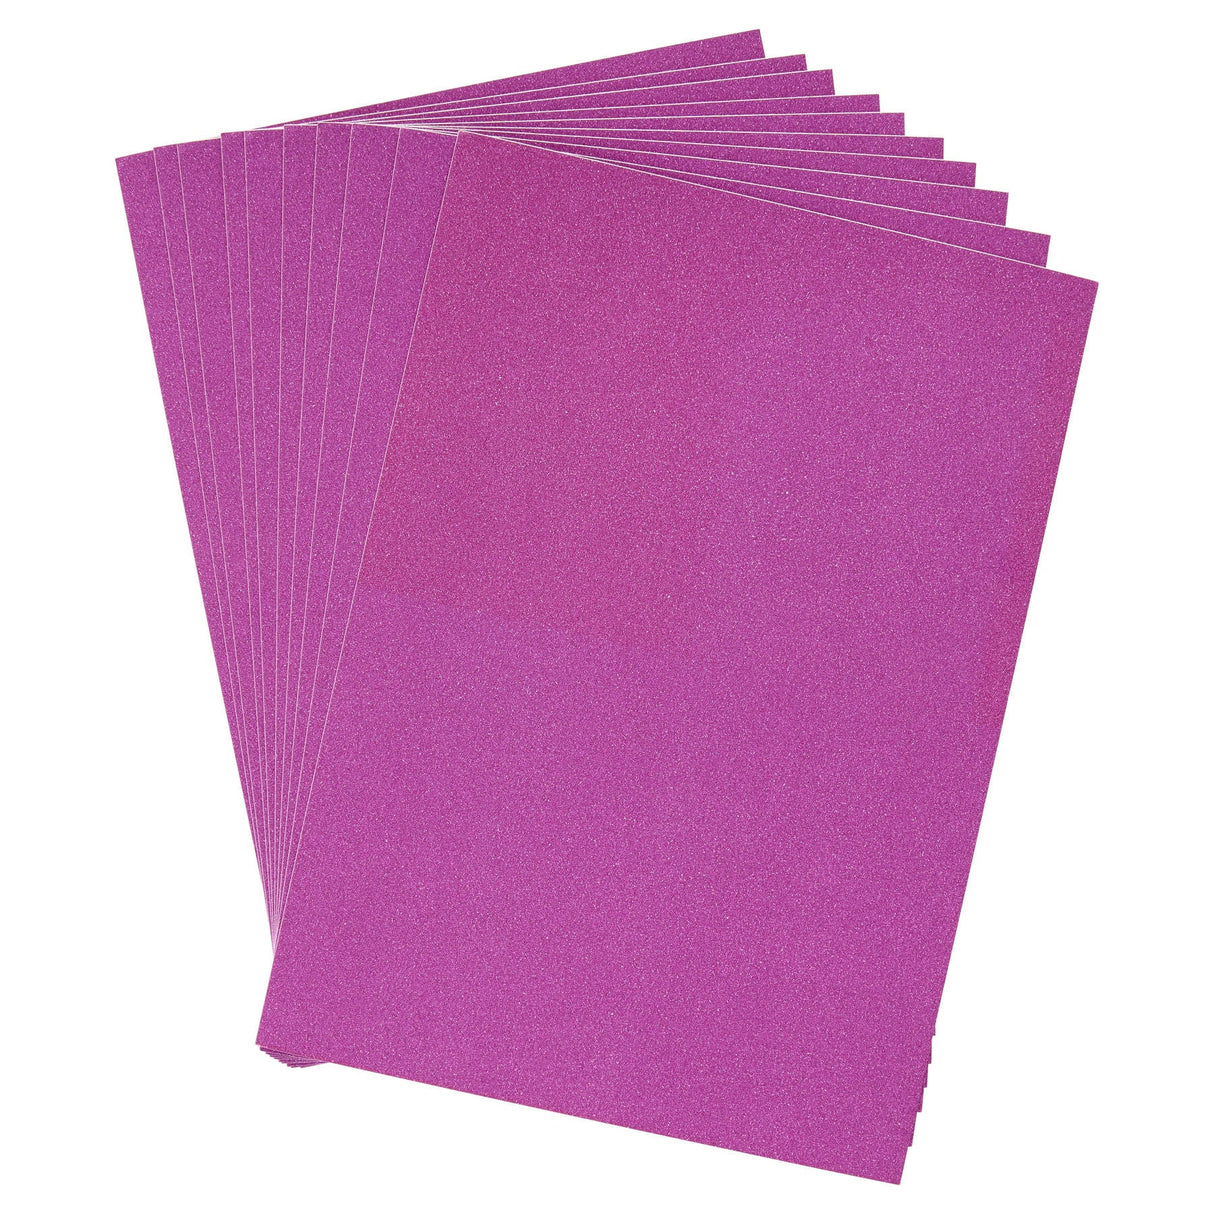 Premier Activity A4 Glitter Card - 250 gsm - Pink - 10 Sheets | Stationery Shop UK